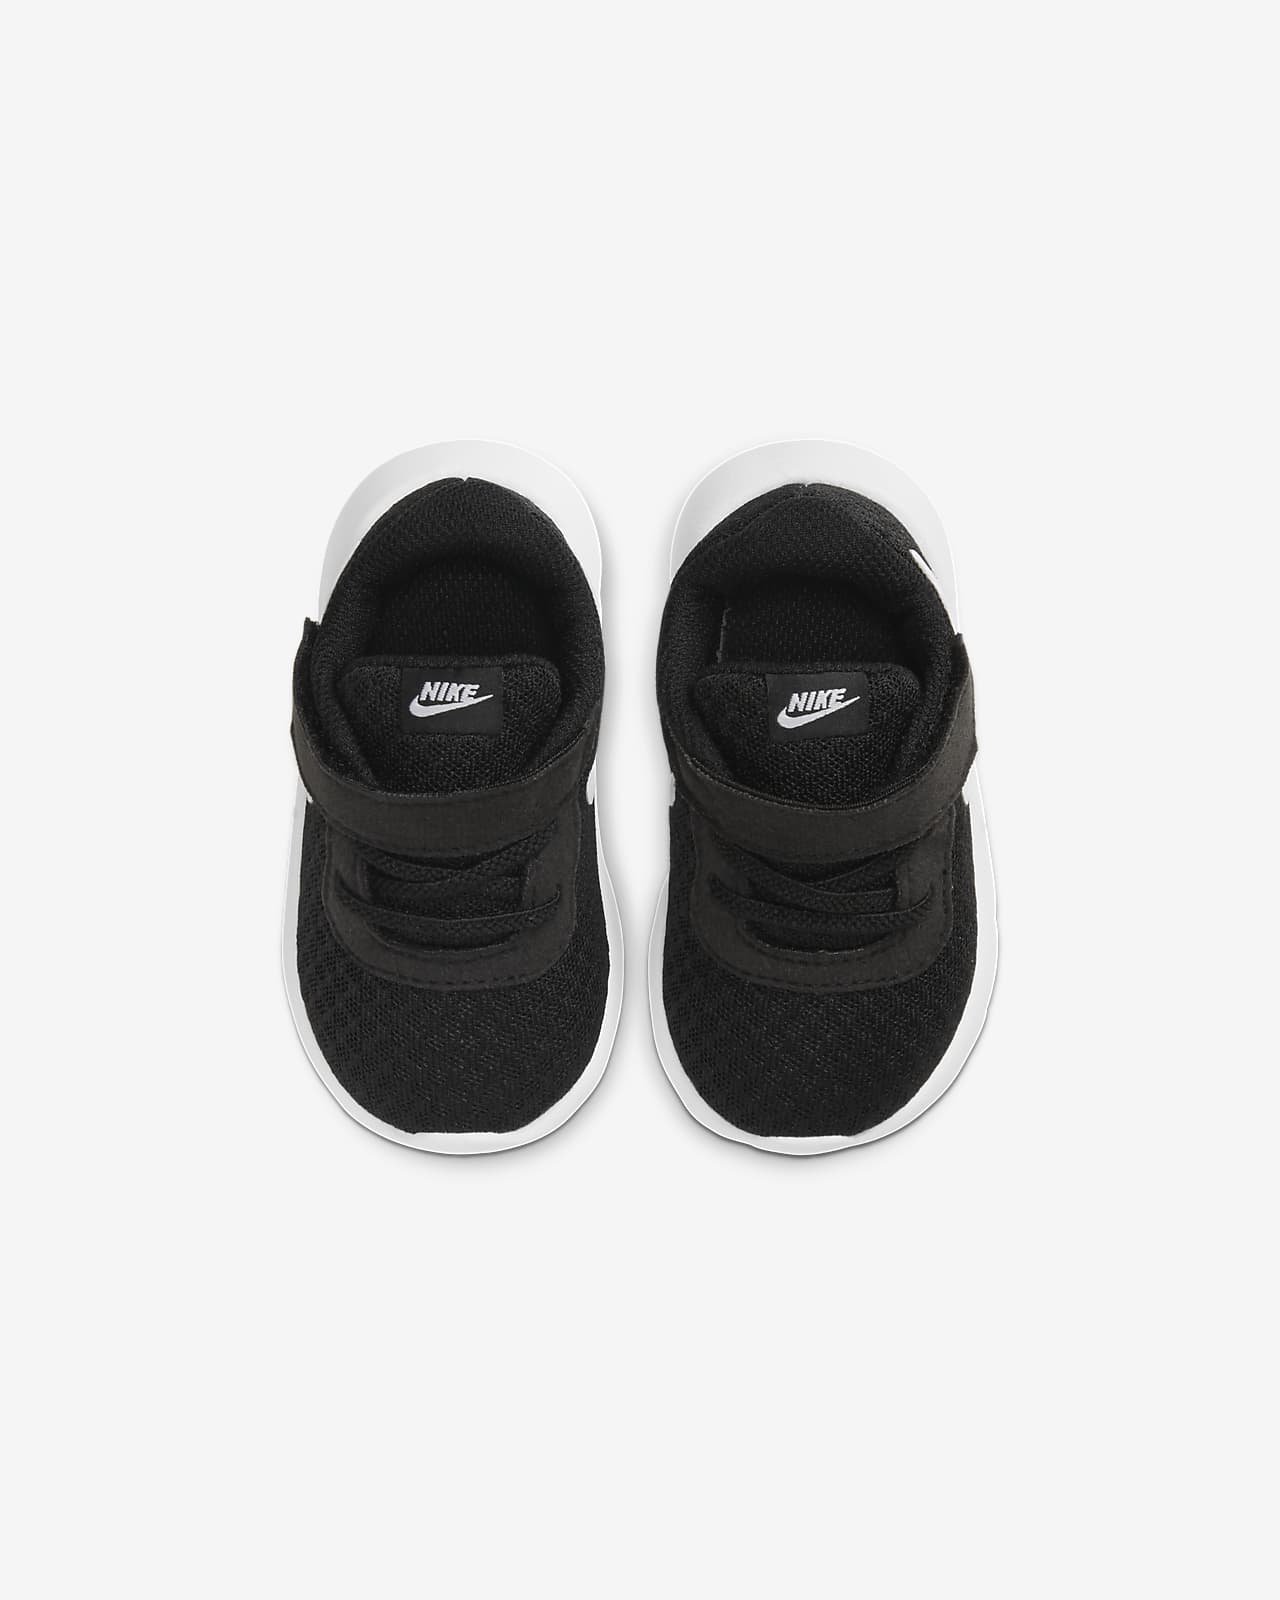 nike baby shoes black